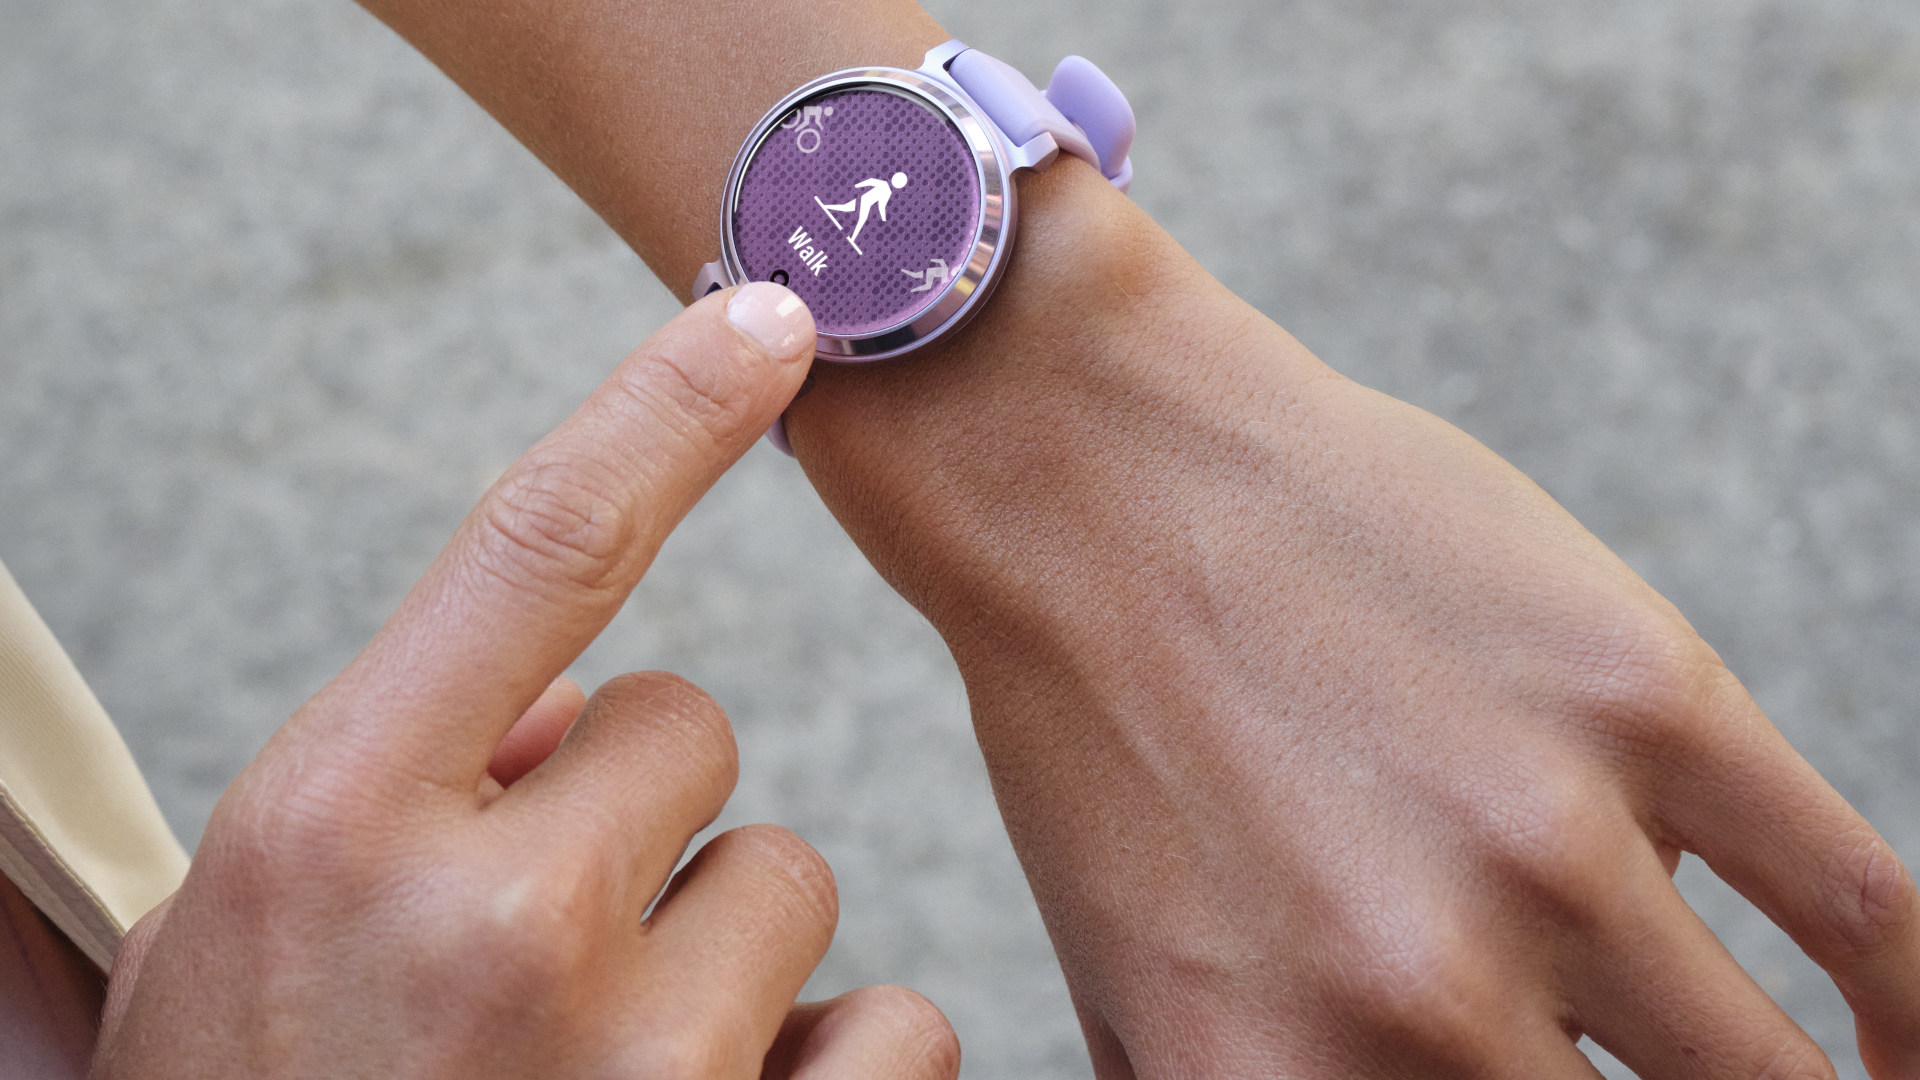 Garmin Lily® 2  Sport Smartwatch for Women